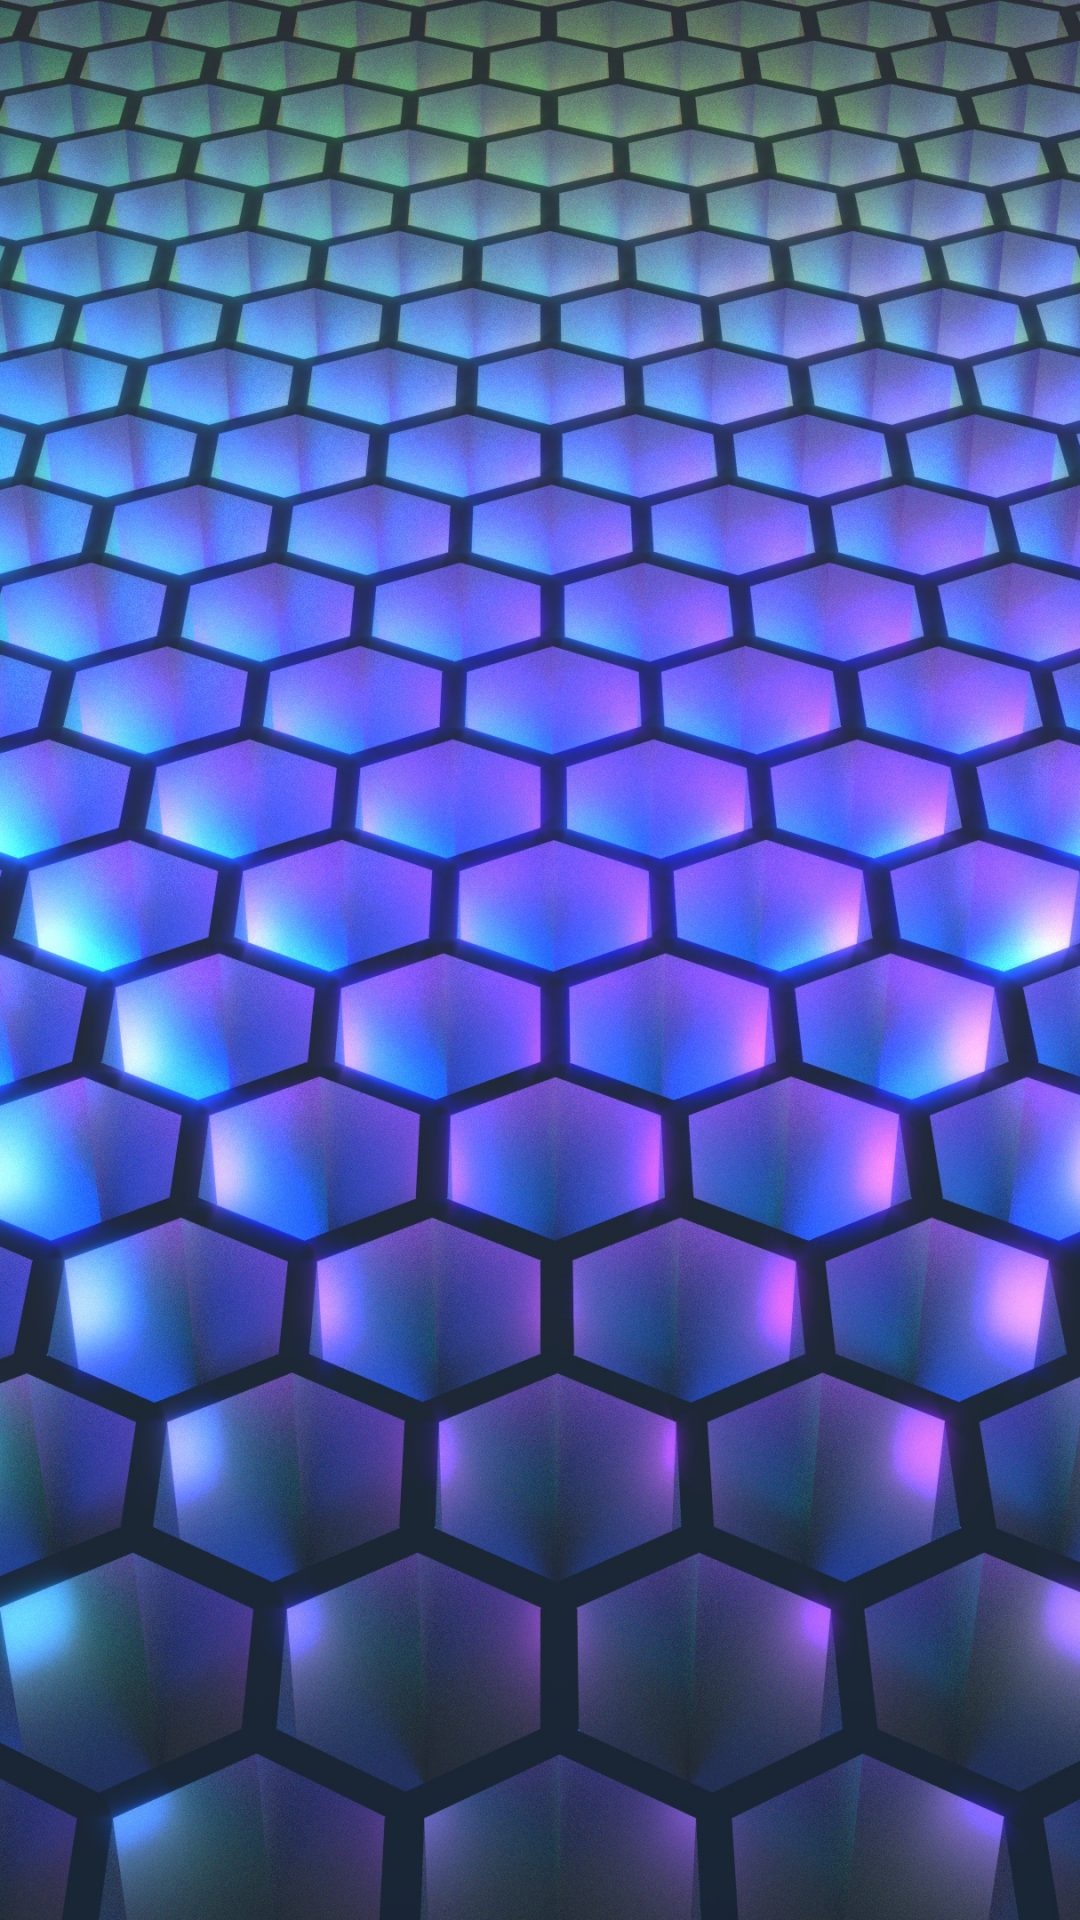 Hexagon background, 4K UHD wallpaper, Geometric design, Striking visuals, 1080x1920 Full HD Handy